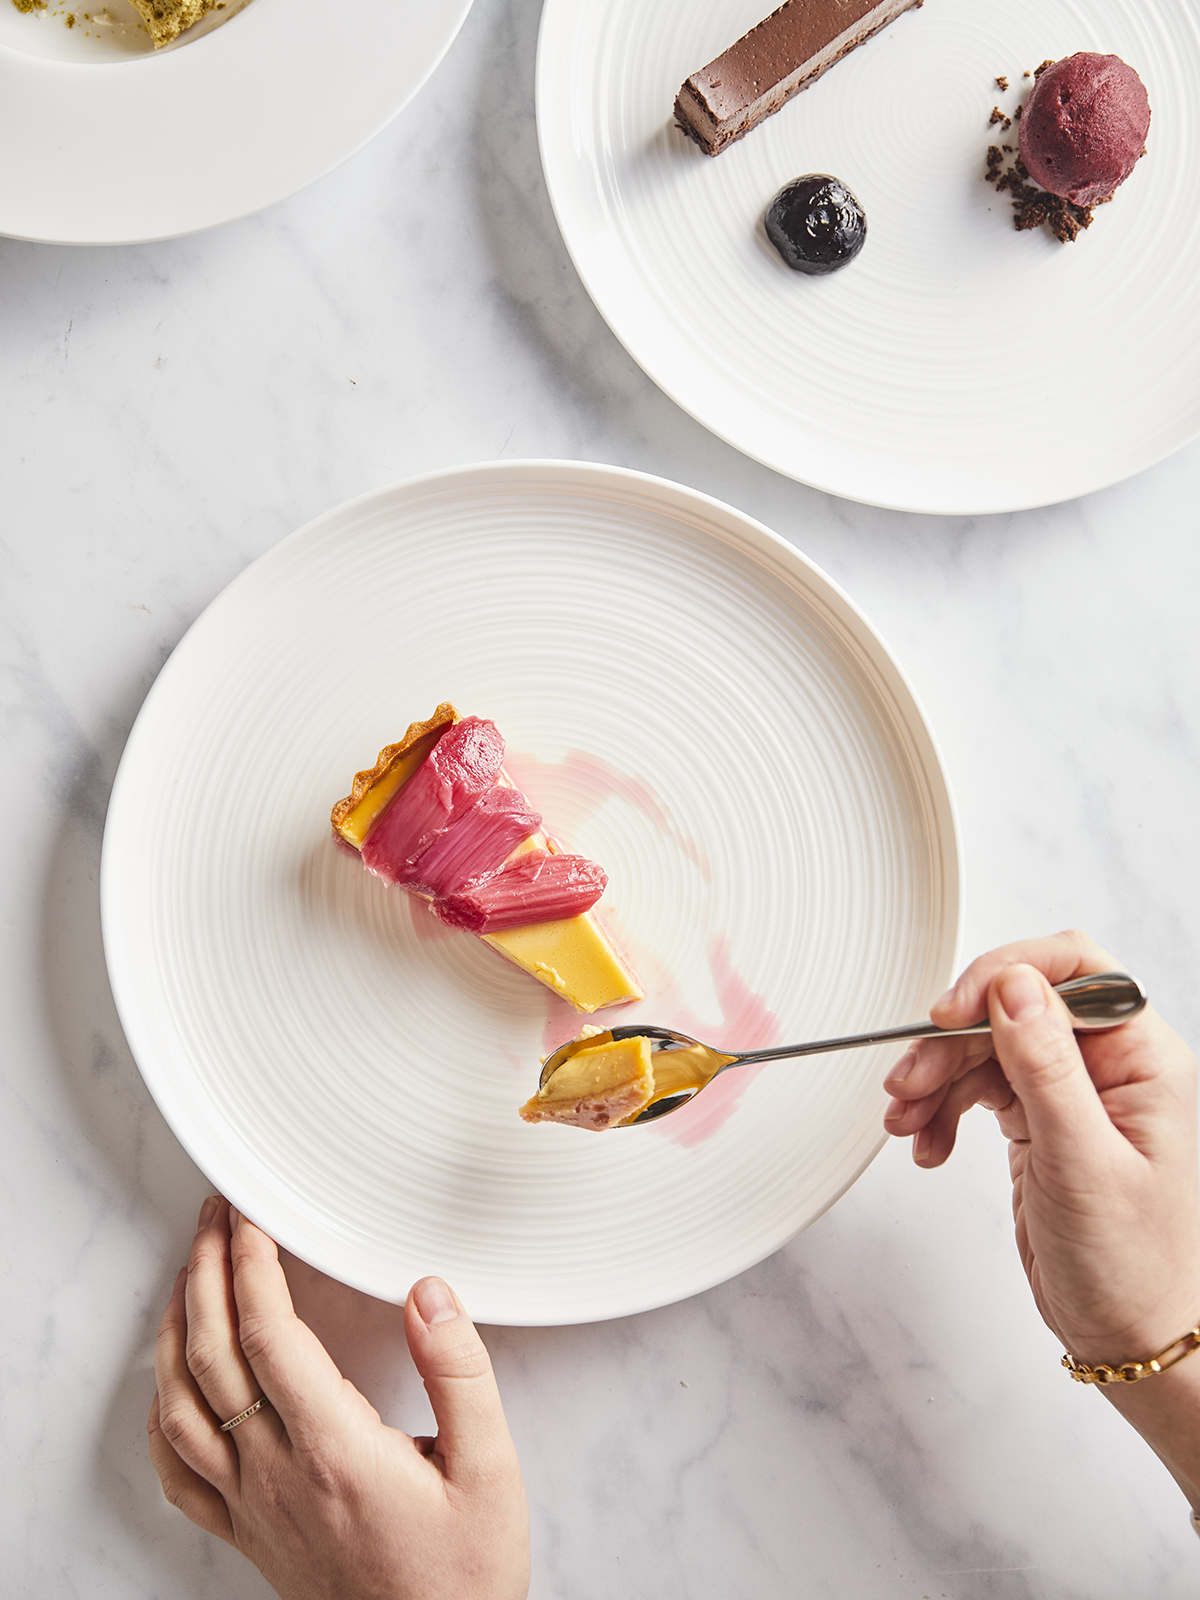 Rhubarb tart, on the menu at Design restaurant by Social Pantry